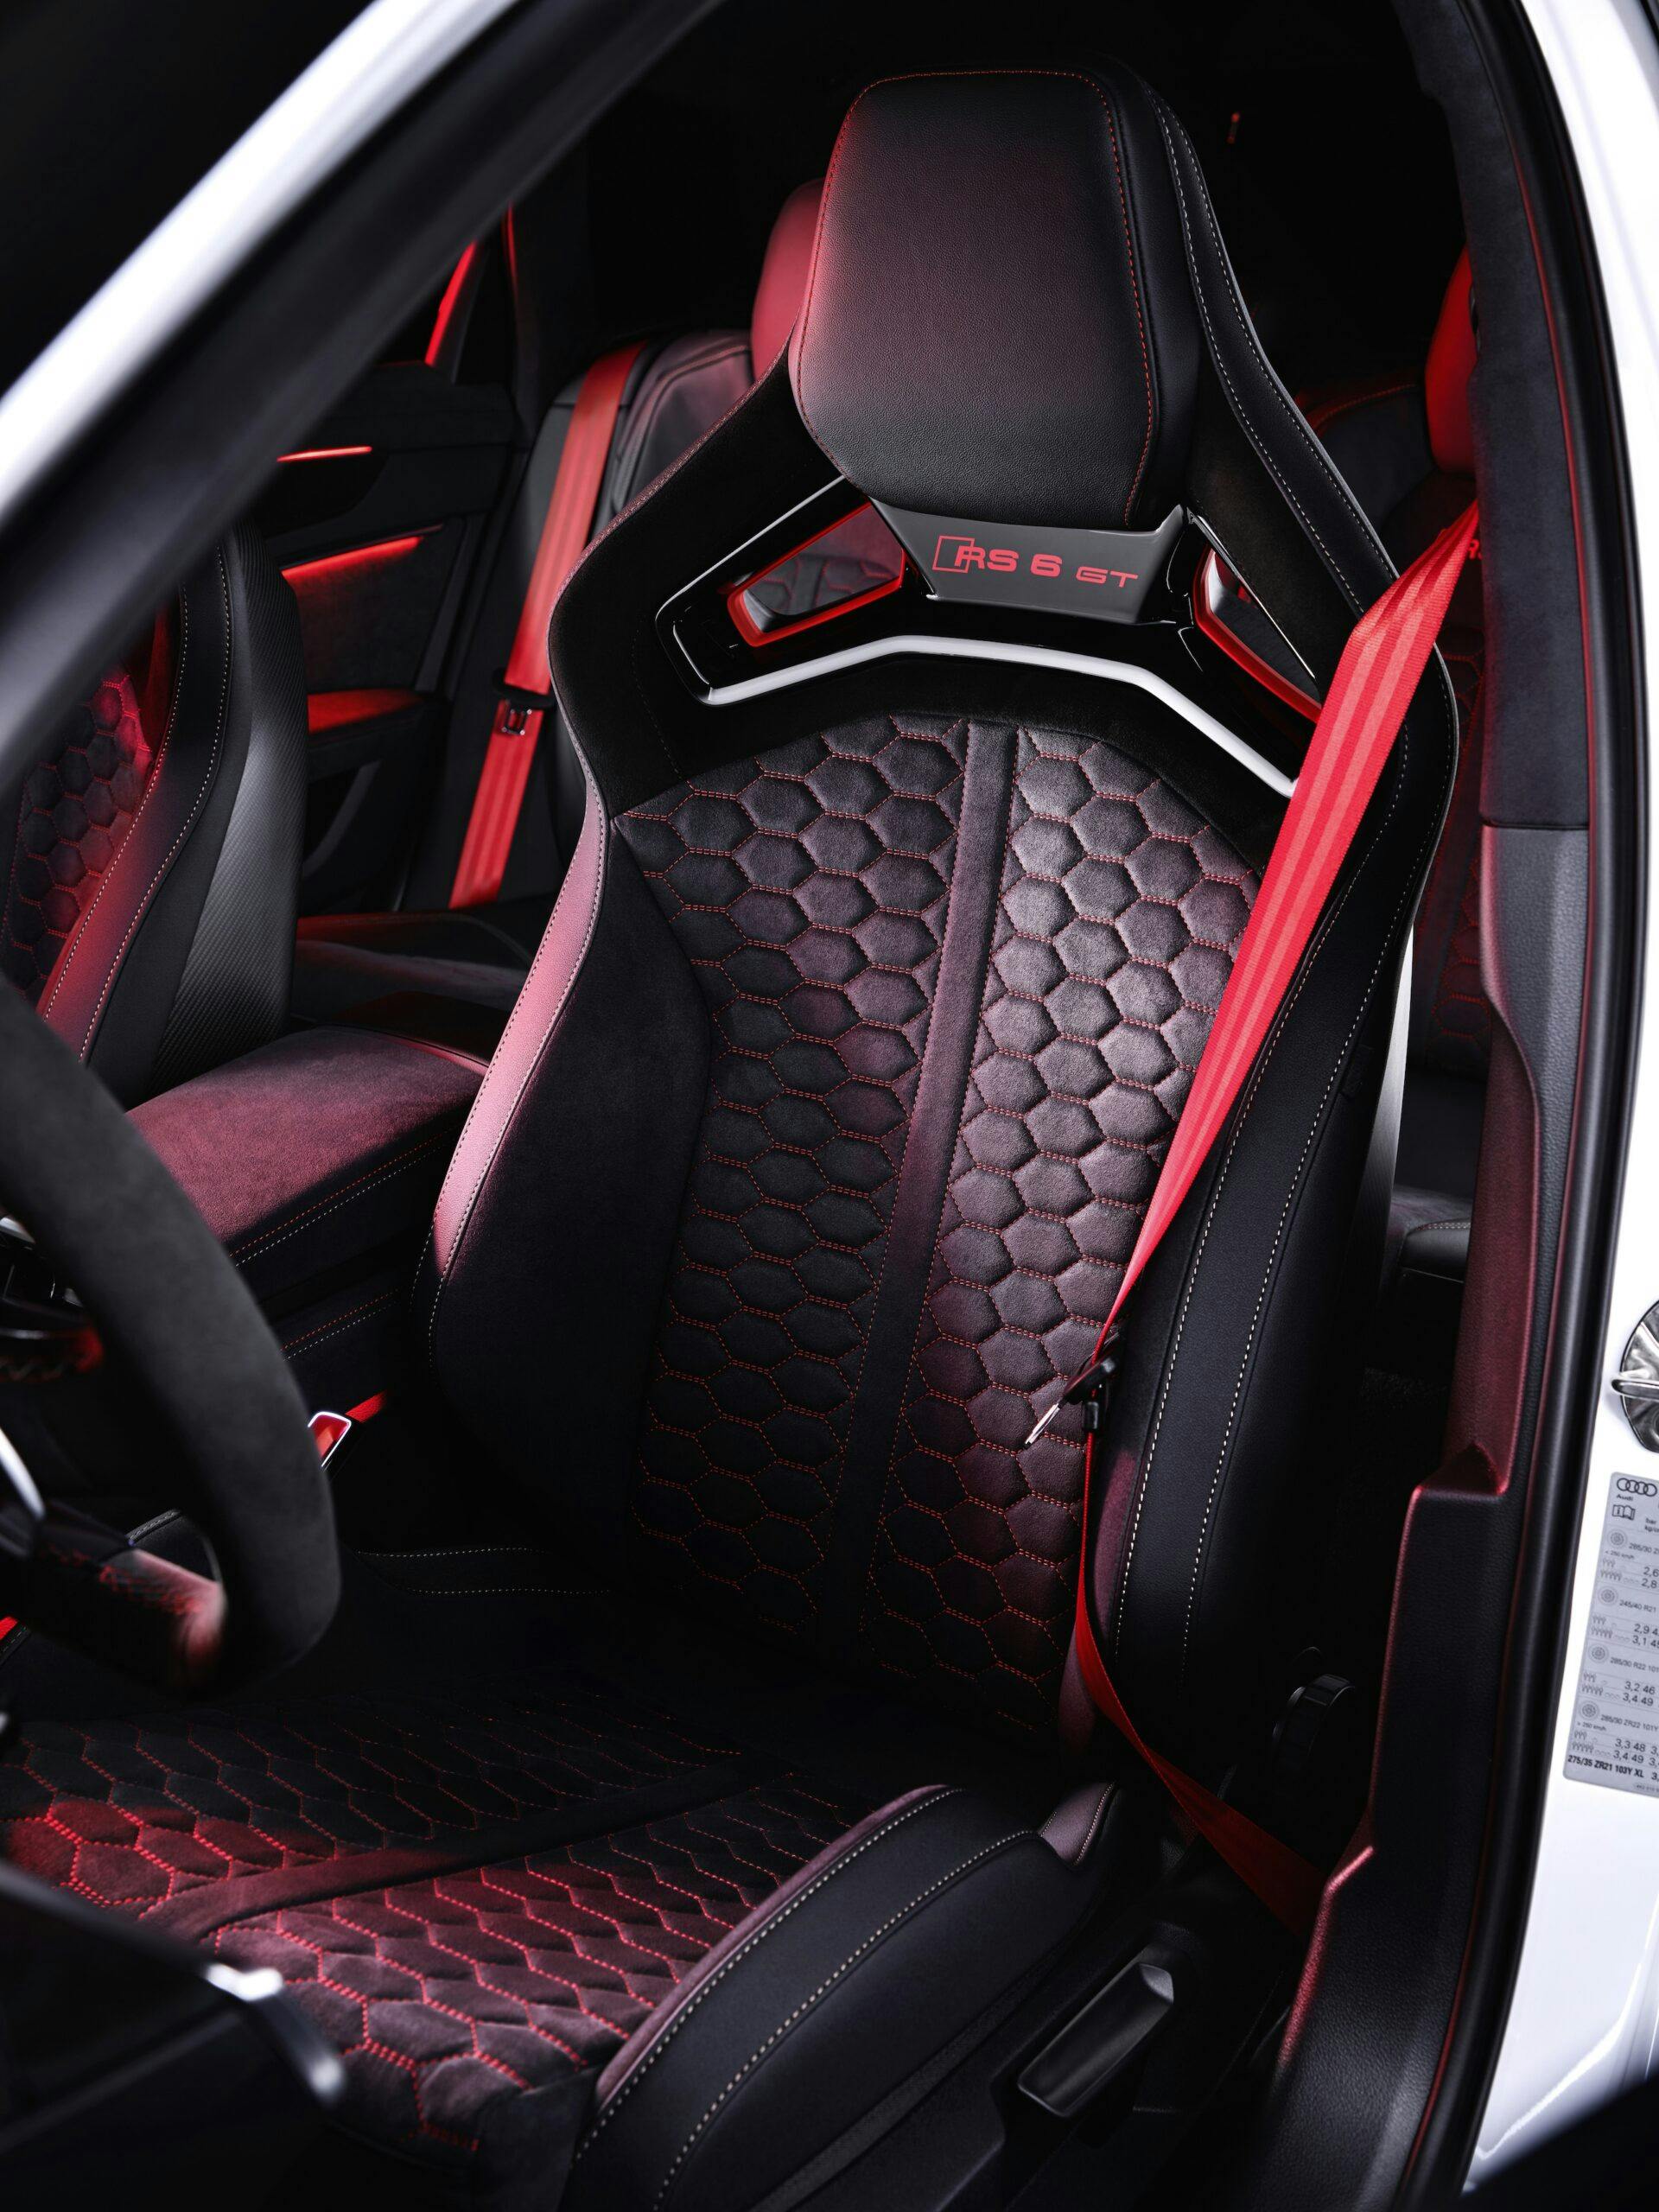 Audi RS 6 Avant GT studio interior seat detail vertical